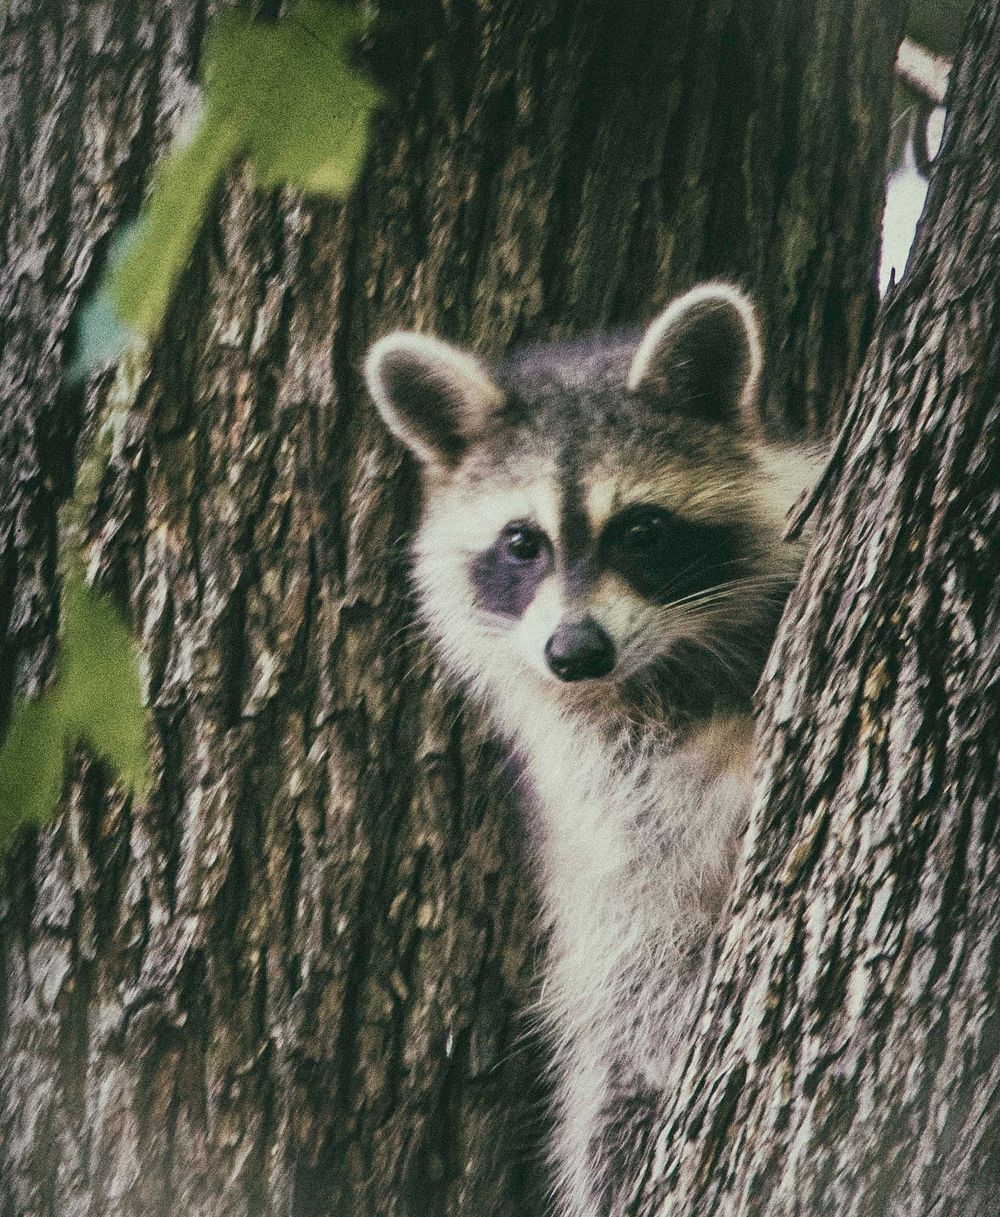 Raccoons on a tree, animal photo.